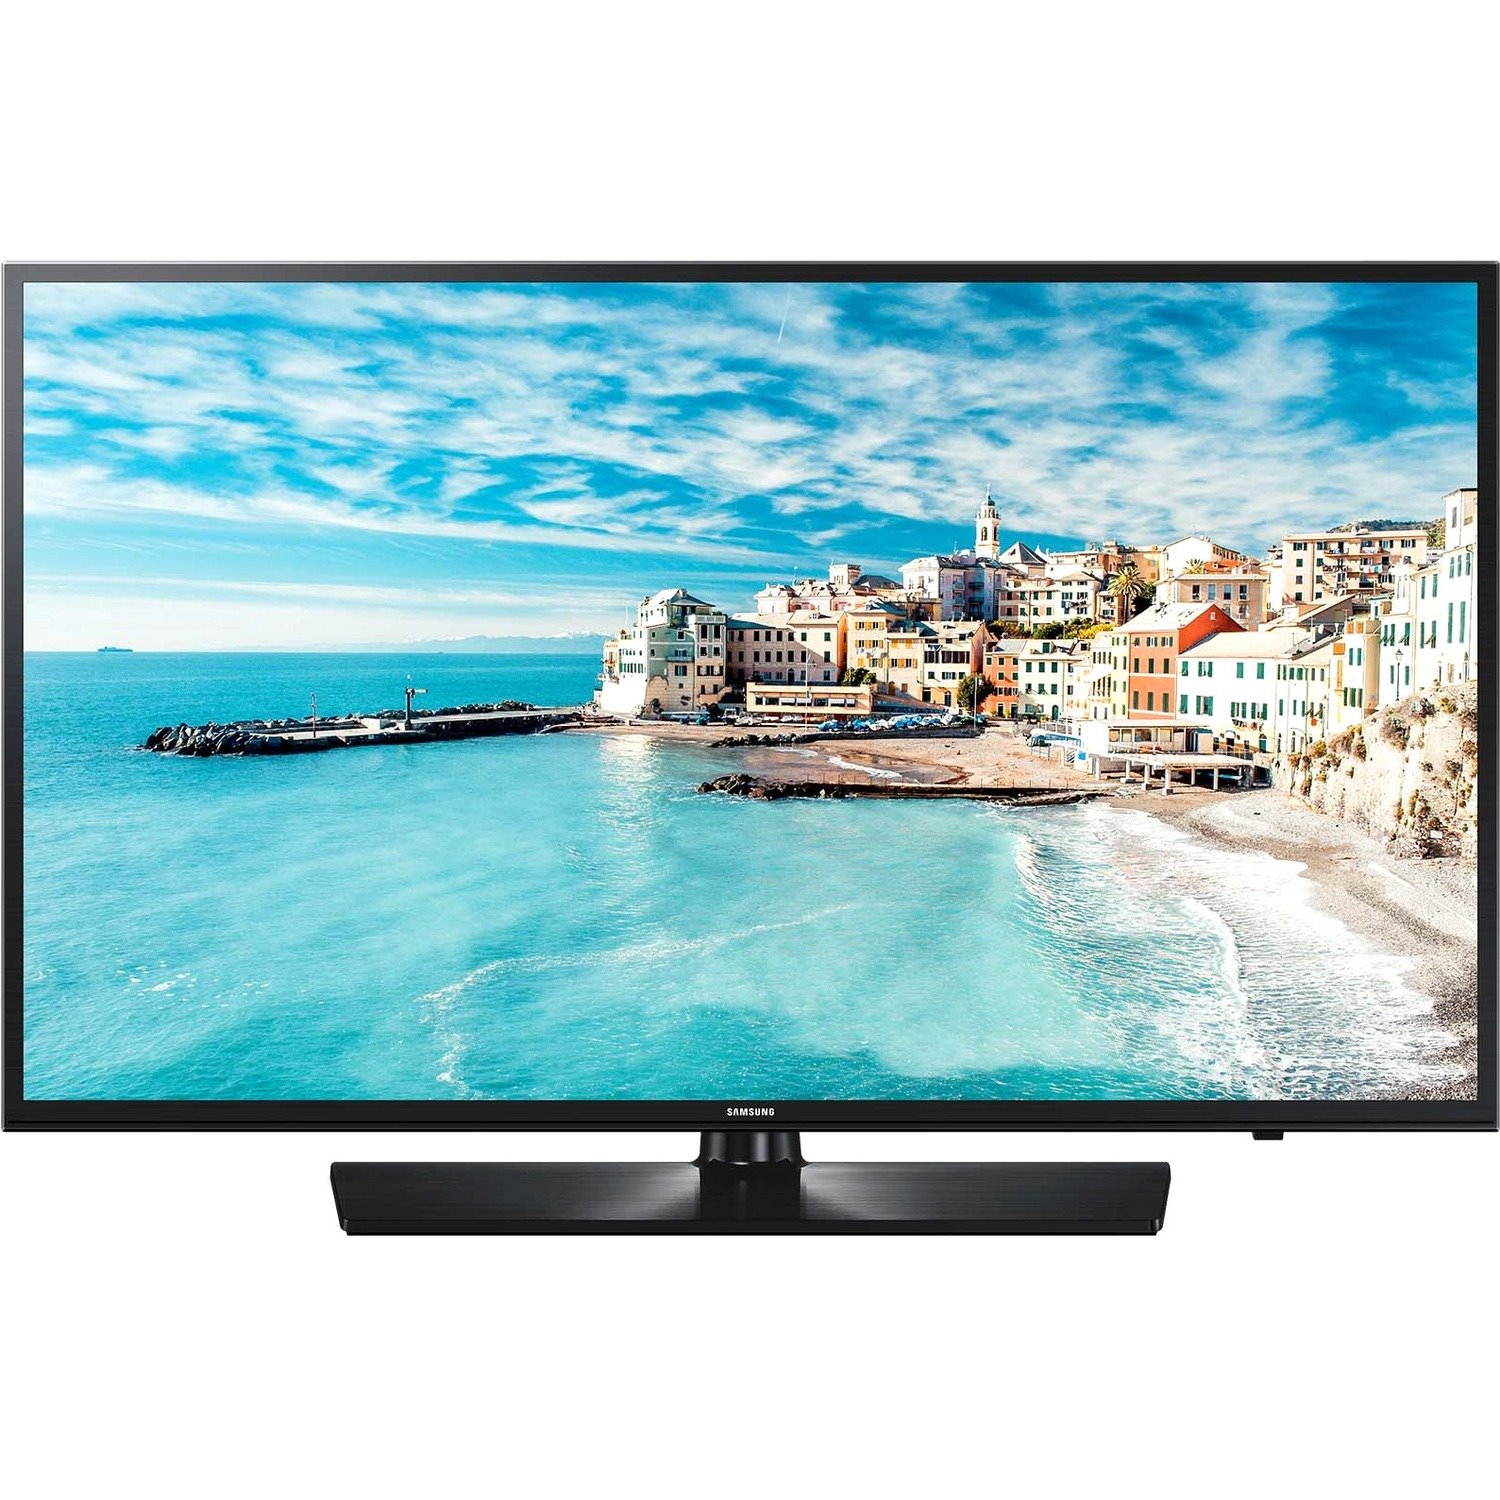 Samsung 690 HG50NF690UF 50" Smart LED-LCD TV - 4K UHDTV - Black